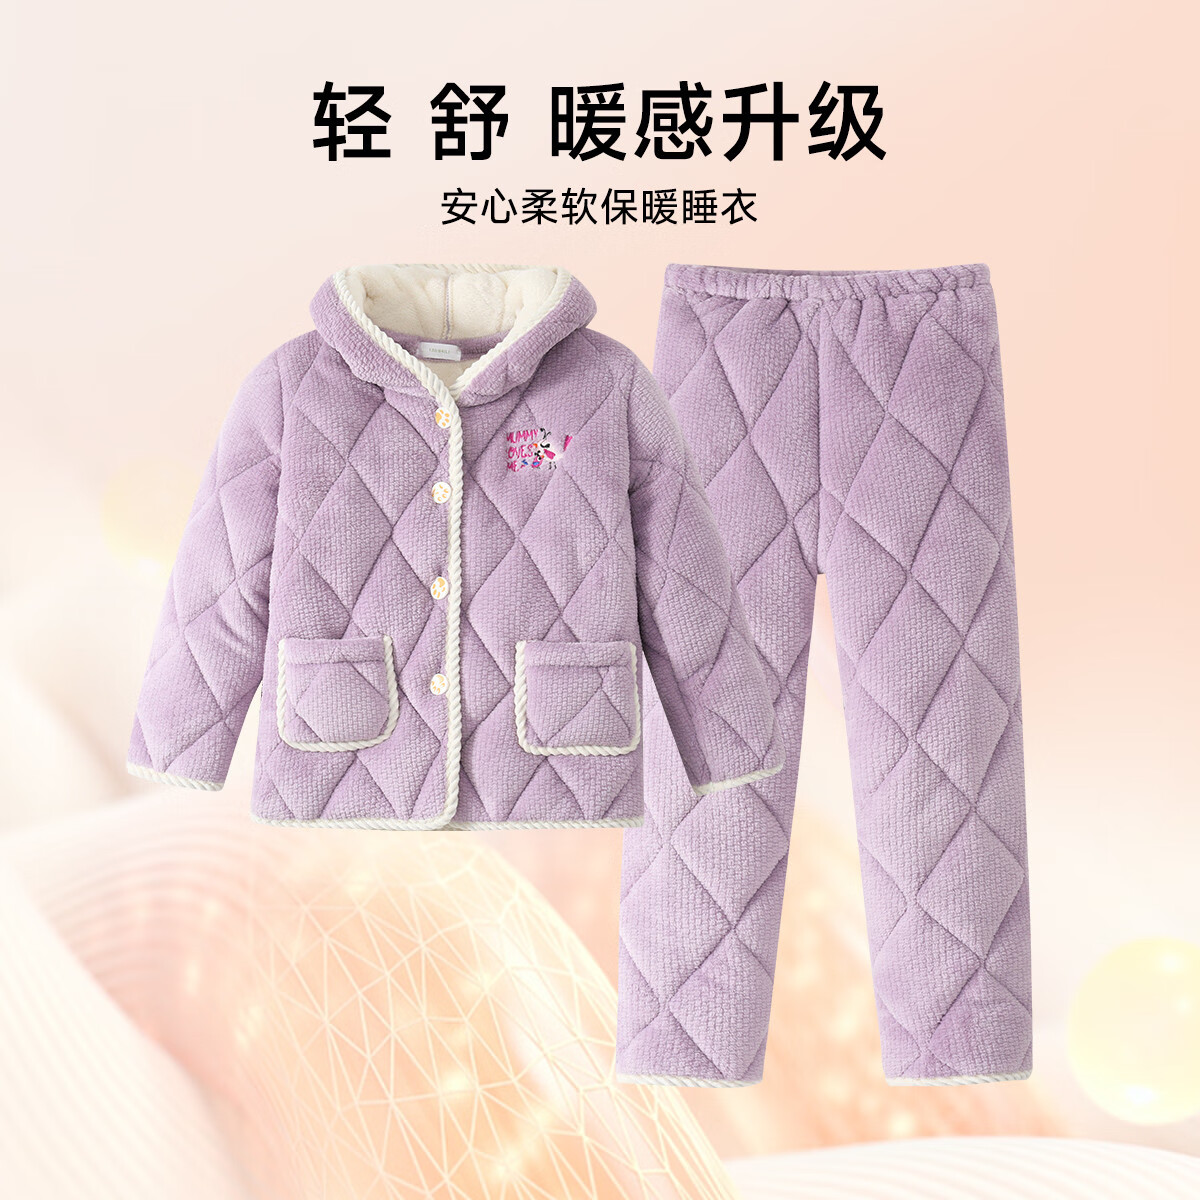 GOSO「三层夹棉加厚」儿童睡衣家居服套装 紫色 XL入手怎么样？深度评测揭秘内情！